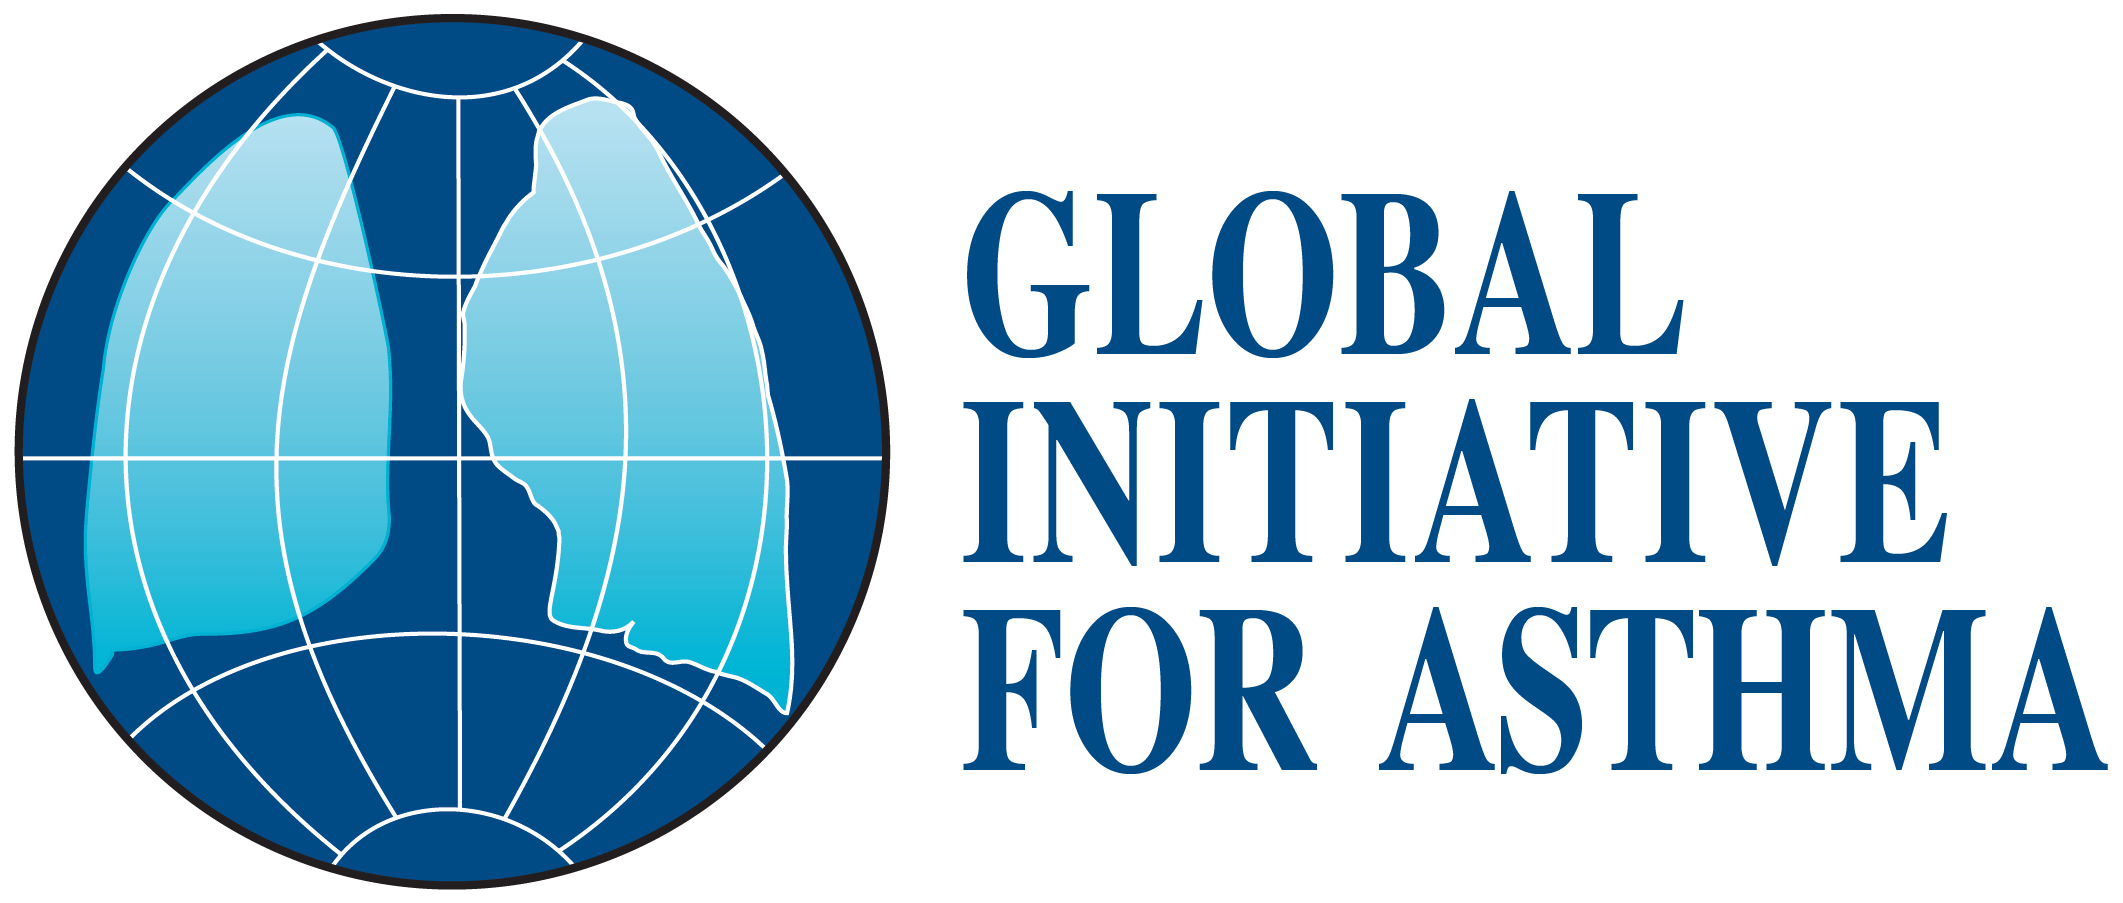 Global Initiative for Asthma – GINA